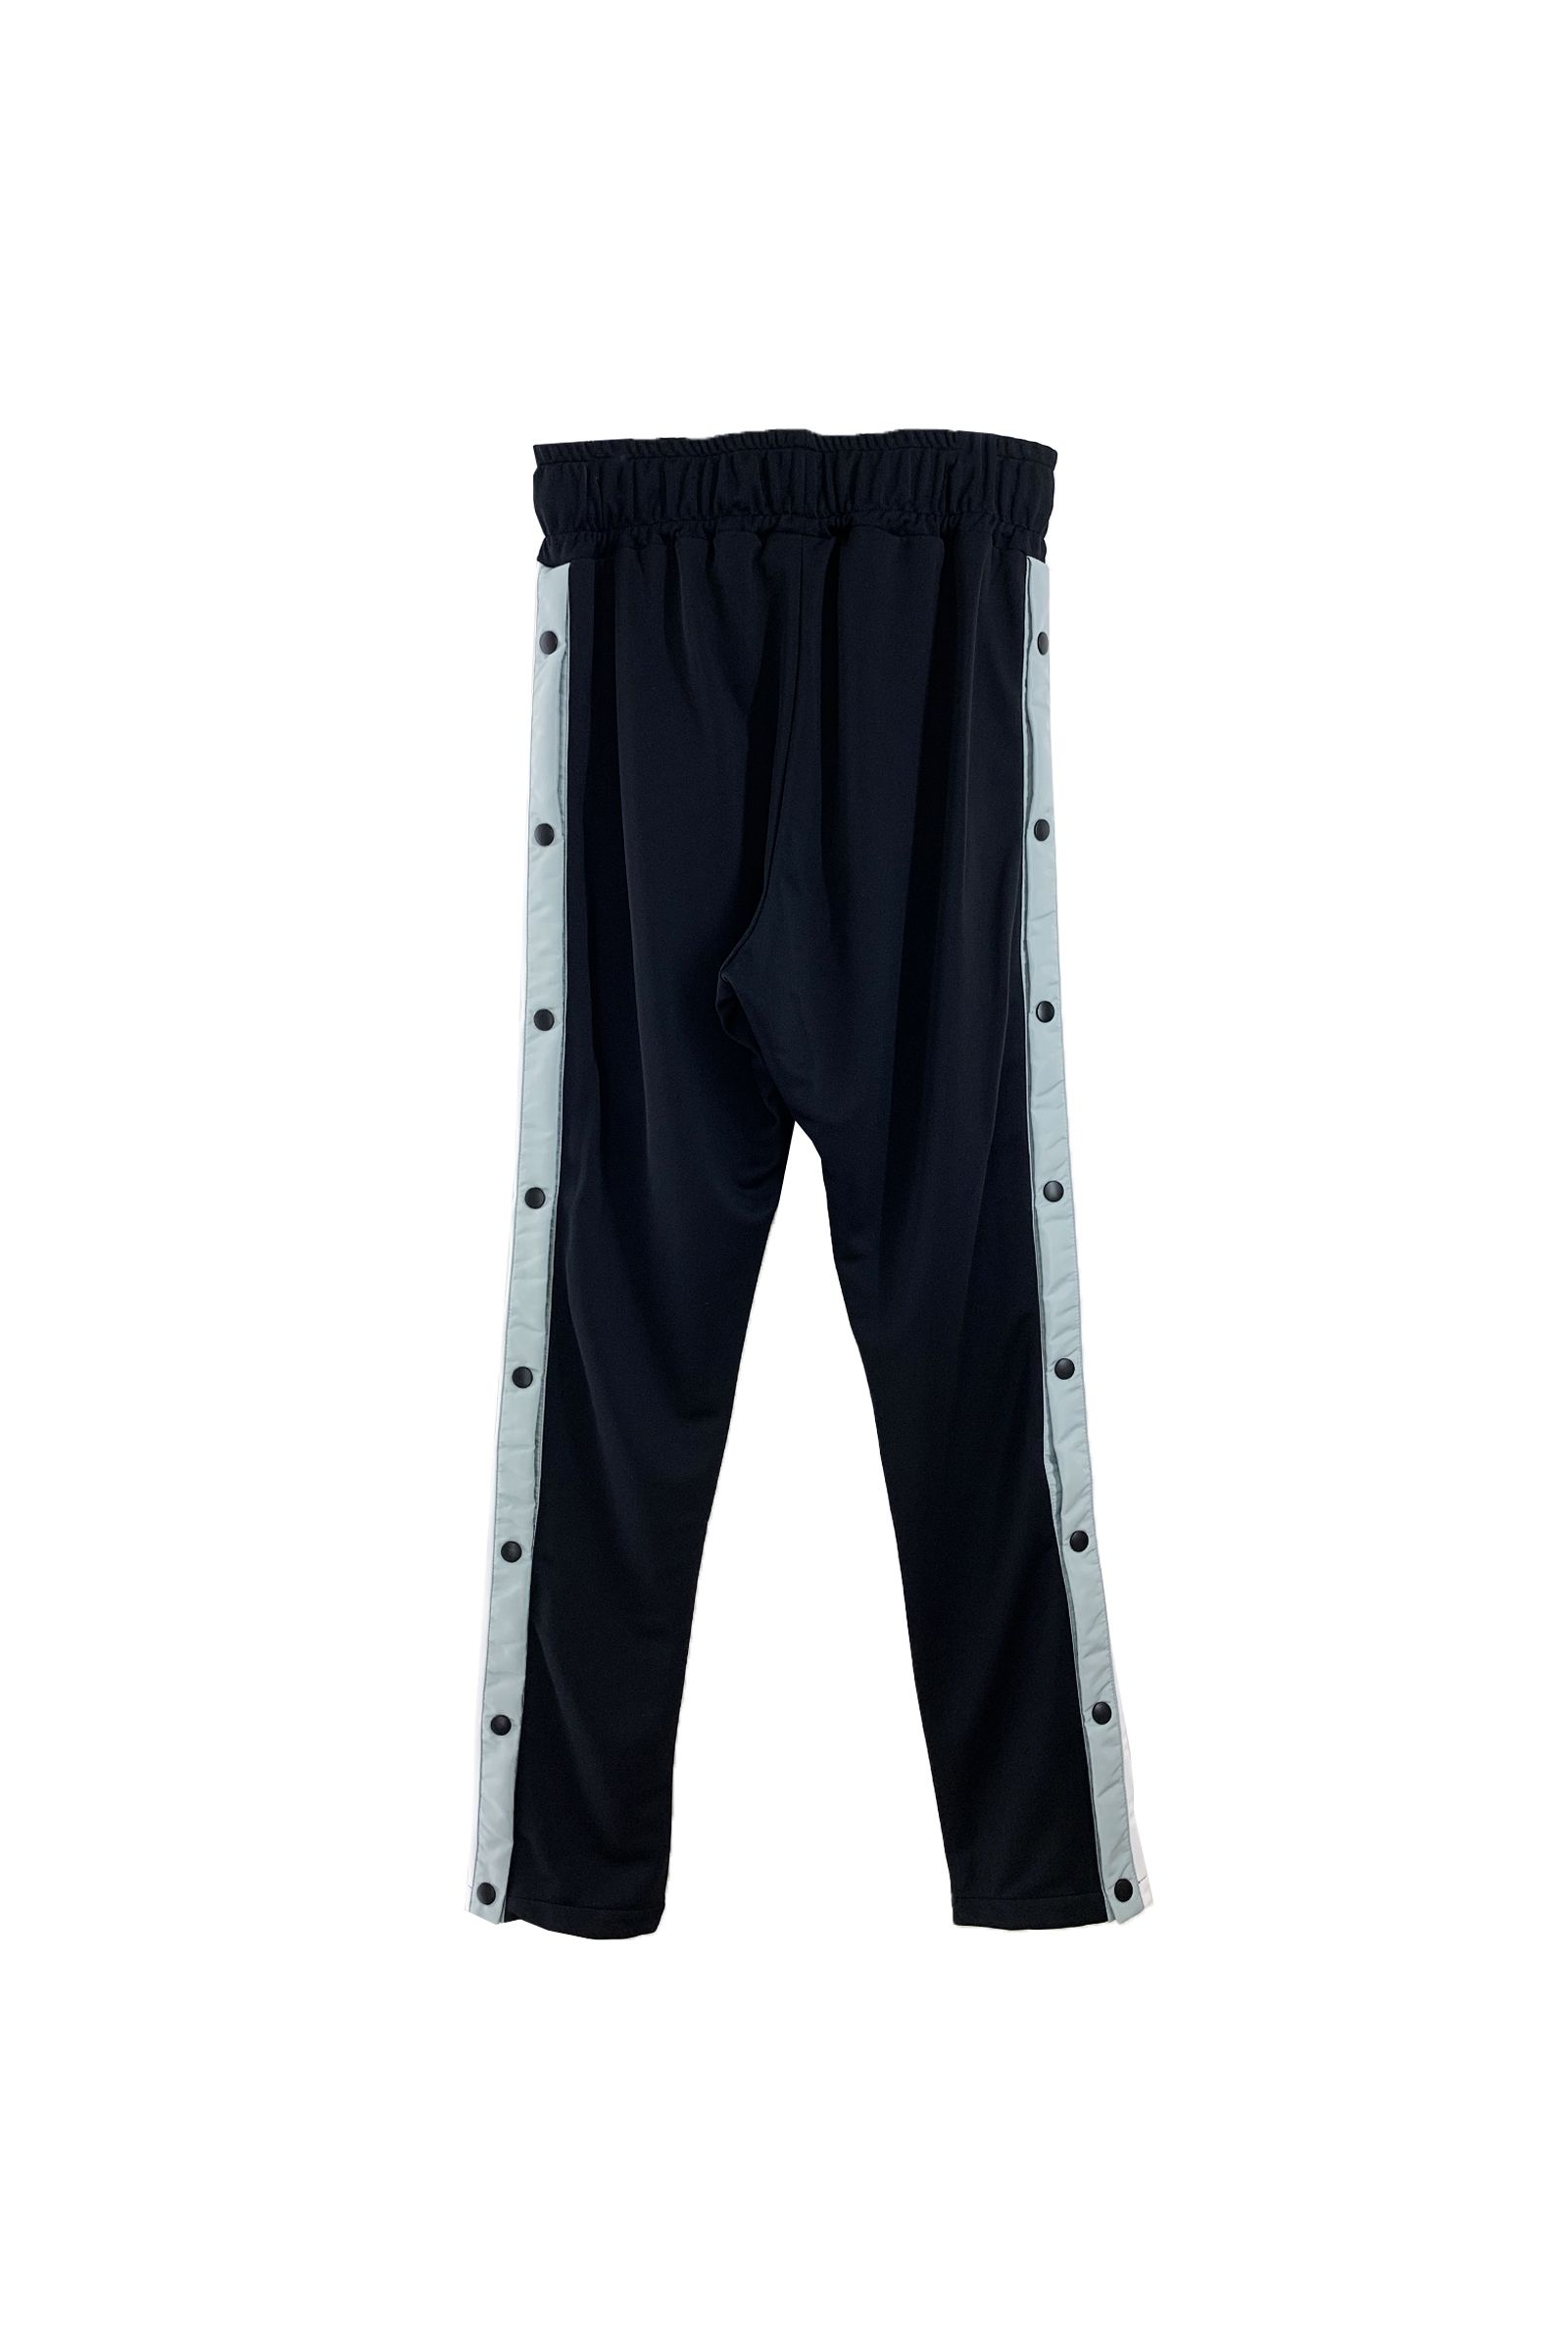 Side Snap Pants red black/gray - 1(Sサイズ)